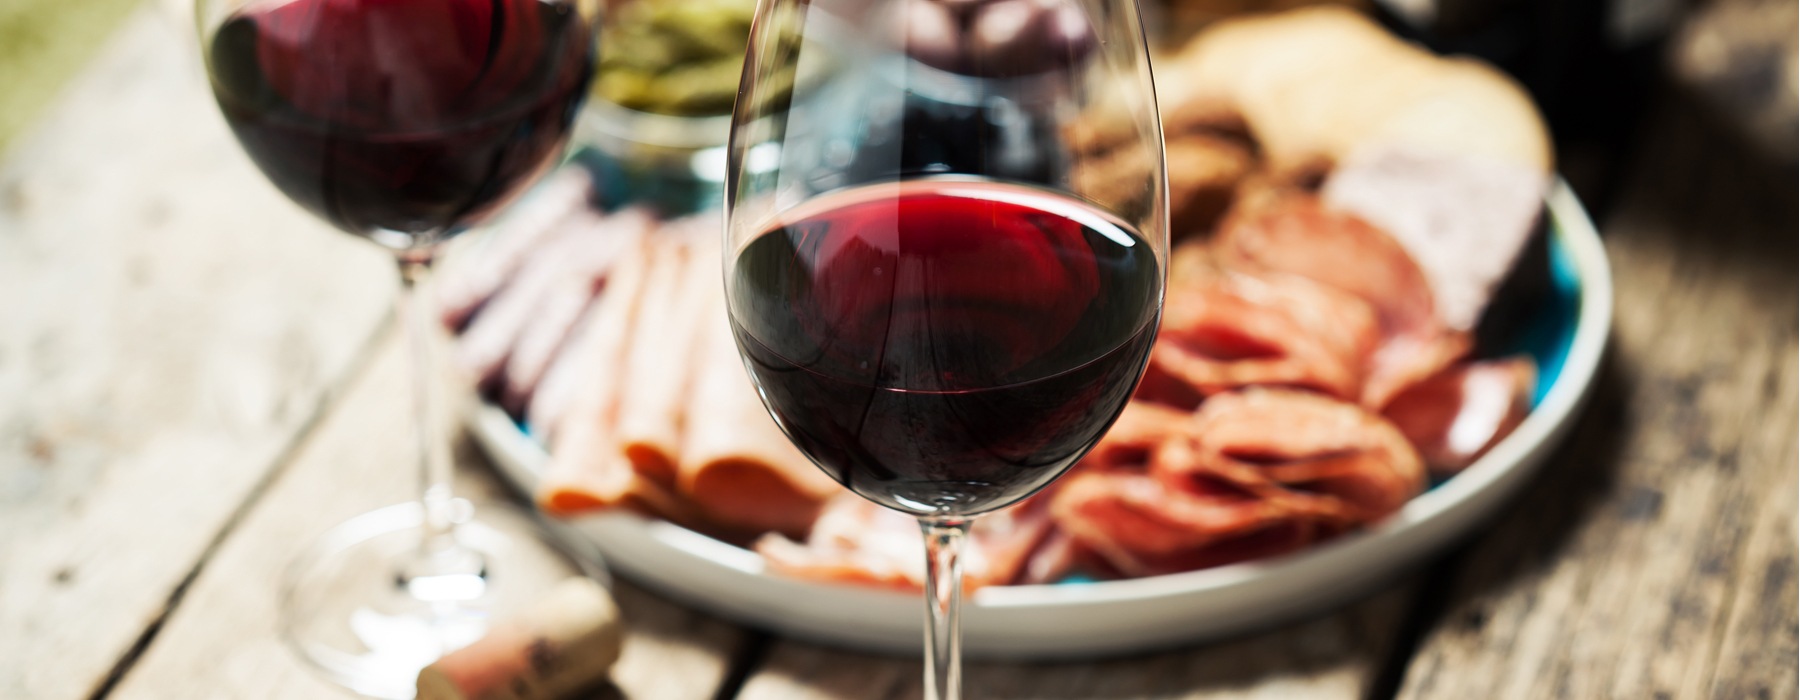 Antipasti platter and wine